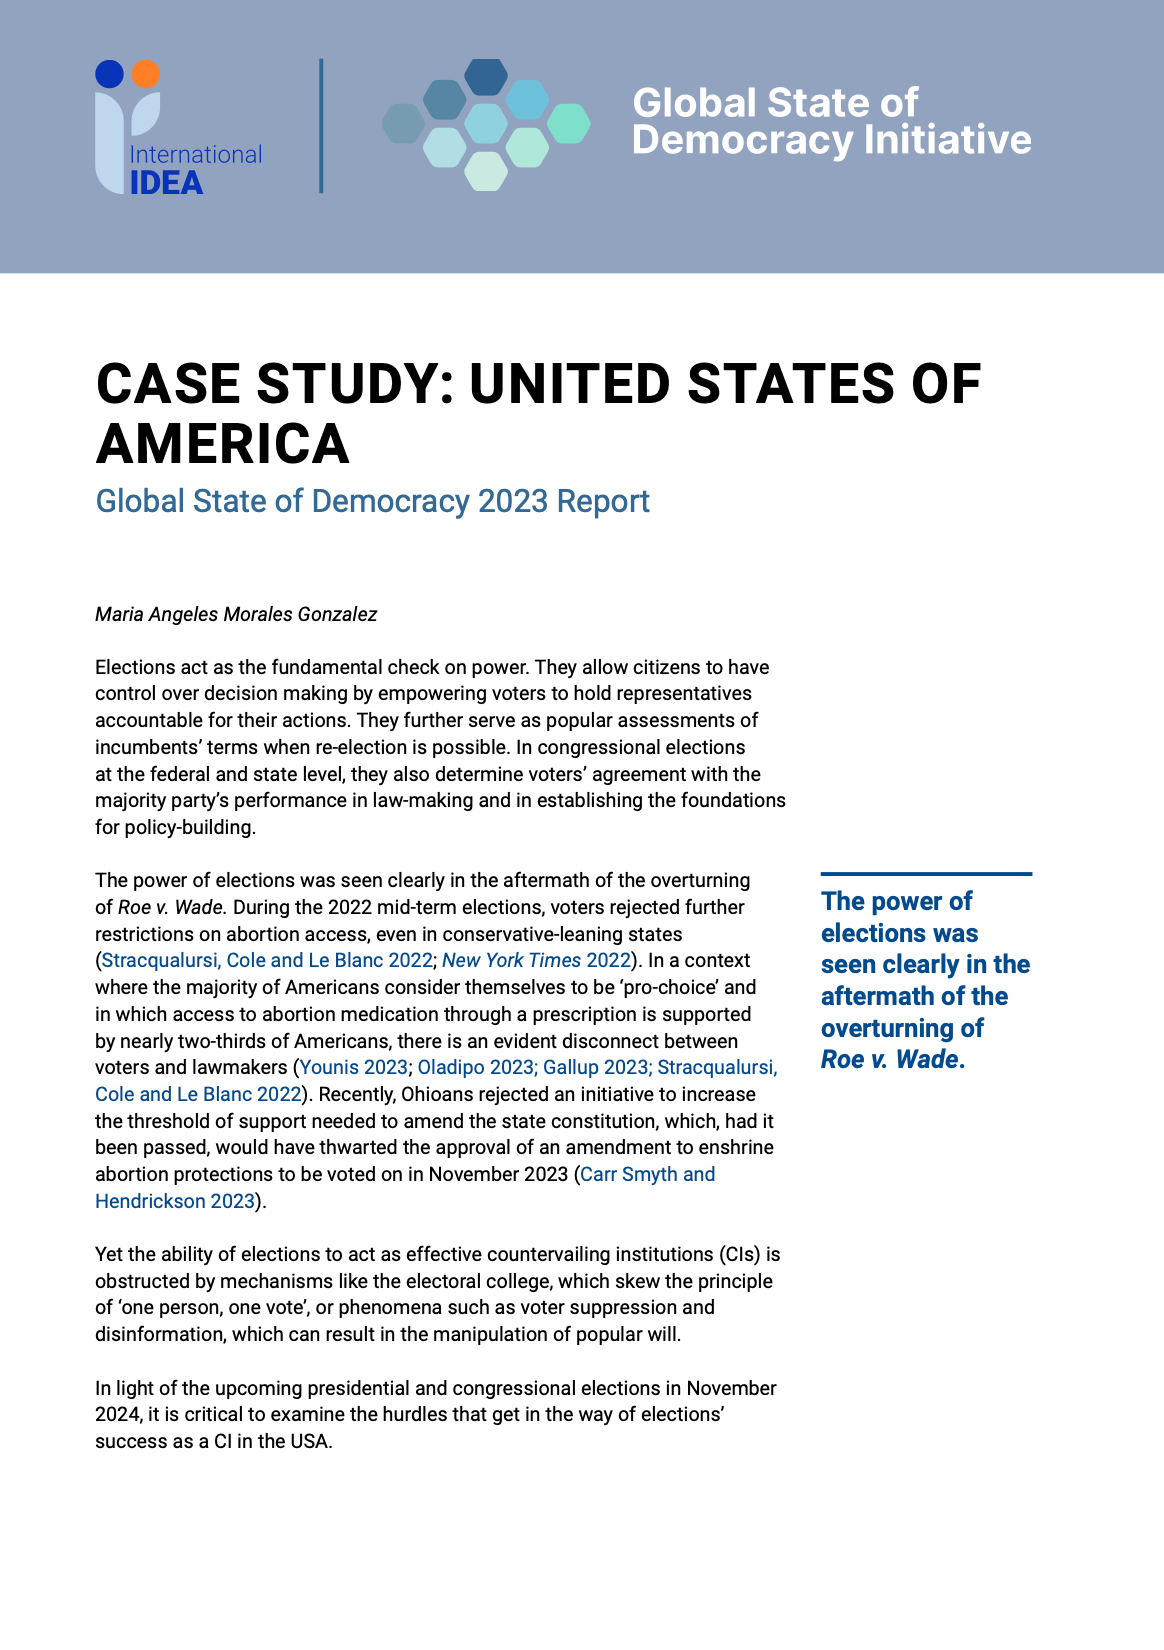 United States of America Case Study